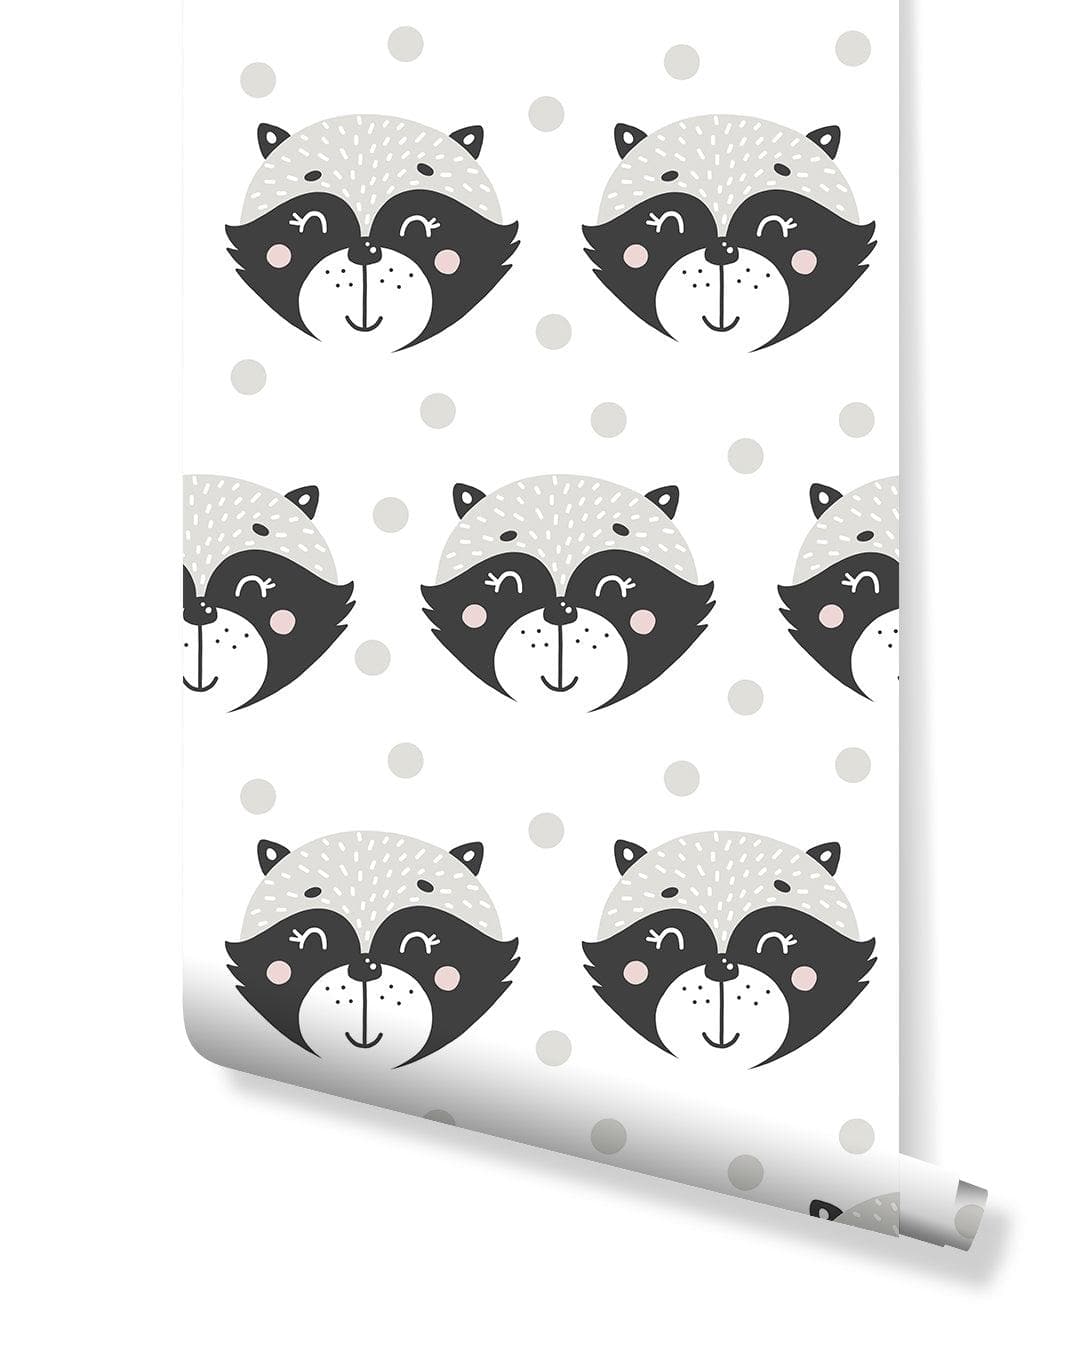 Friendly Raccoons Kids Animal Print Removable Wallpaper - MAIA HOMES